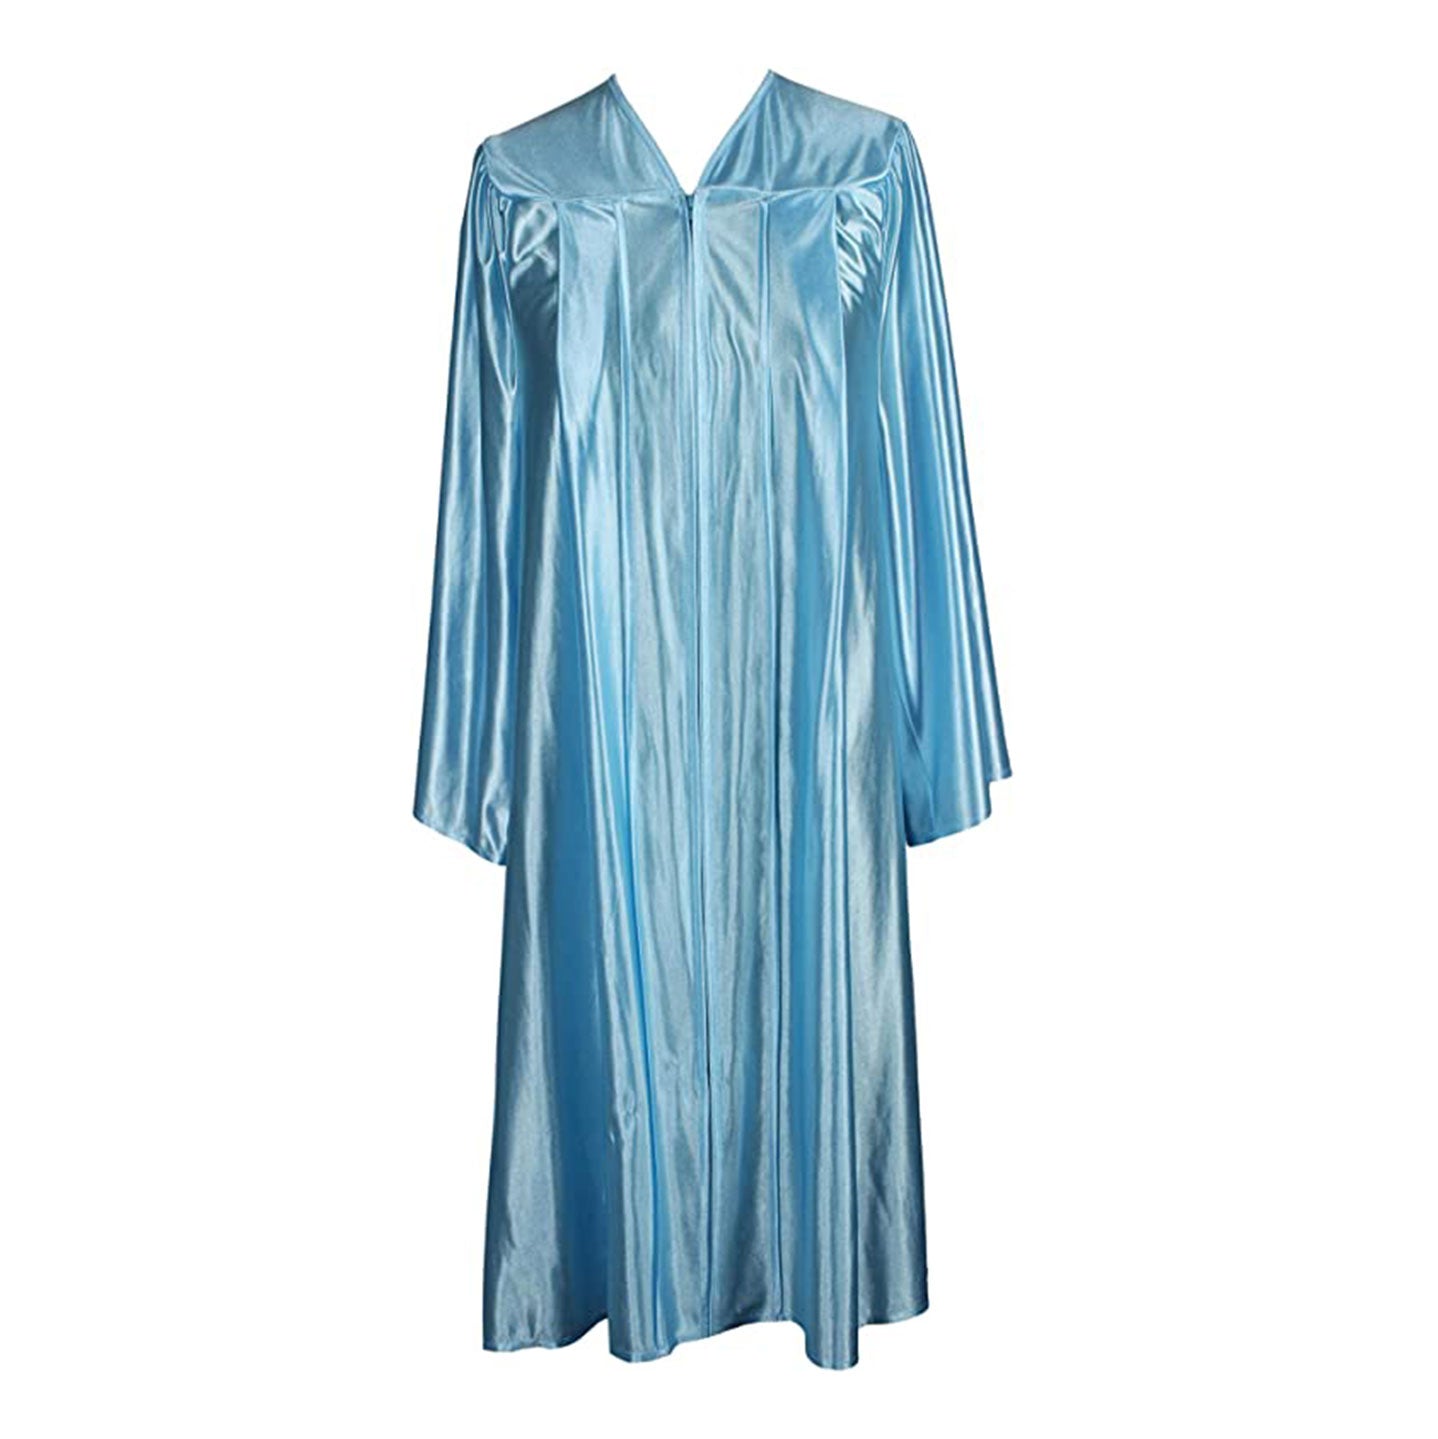 Shiny Light Blue Choir Gown